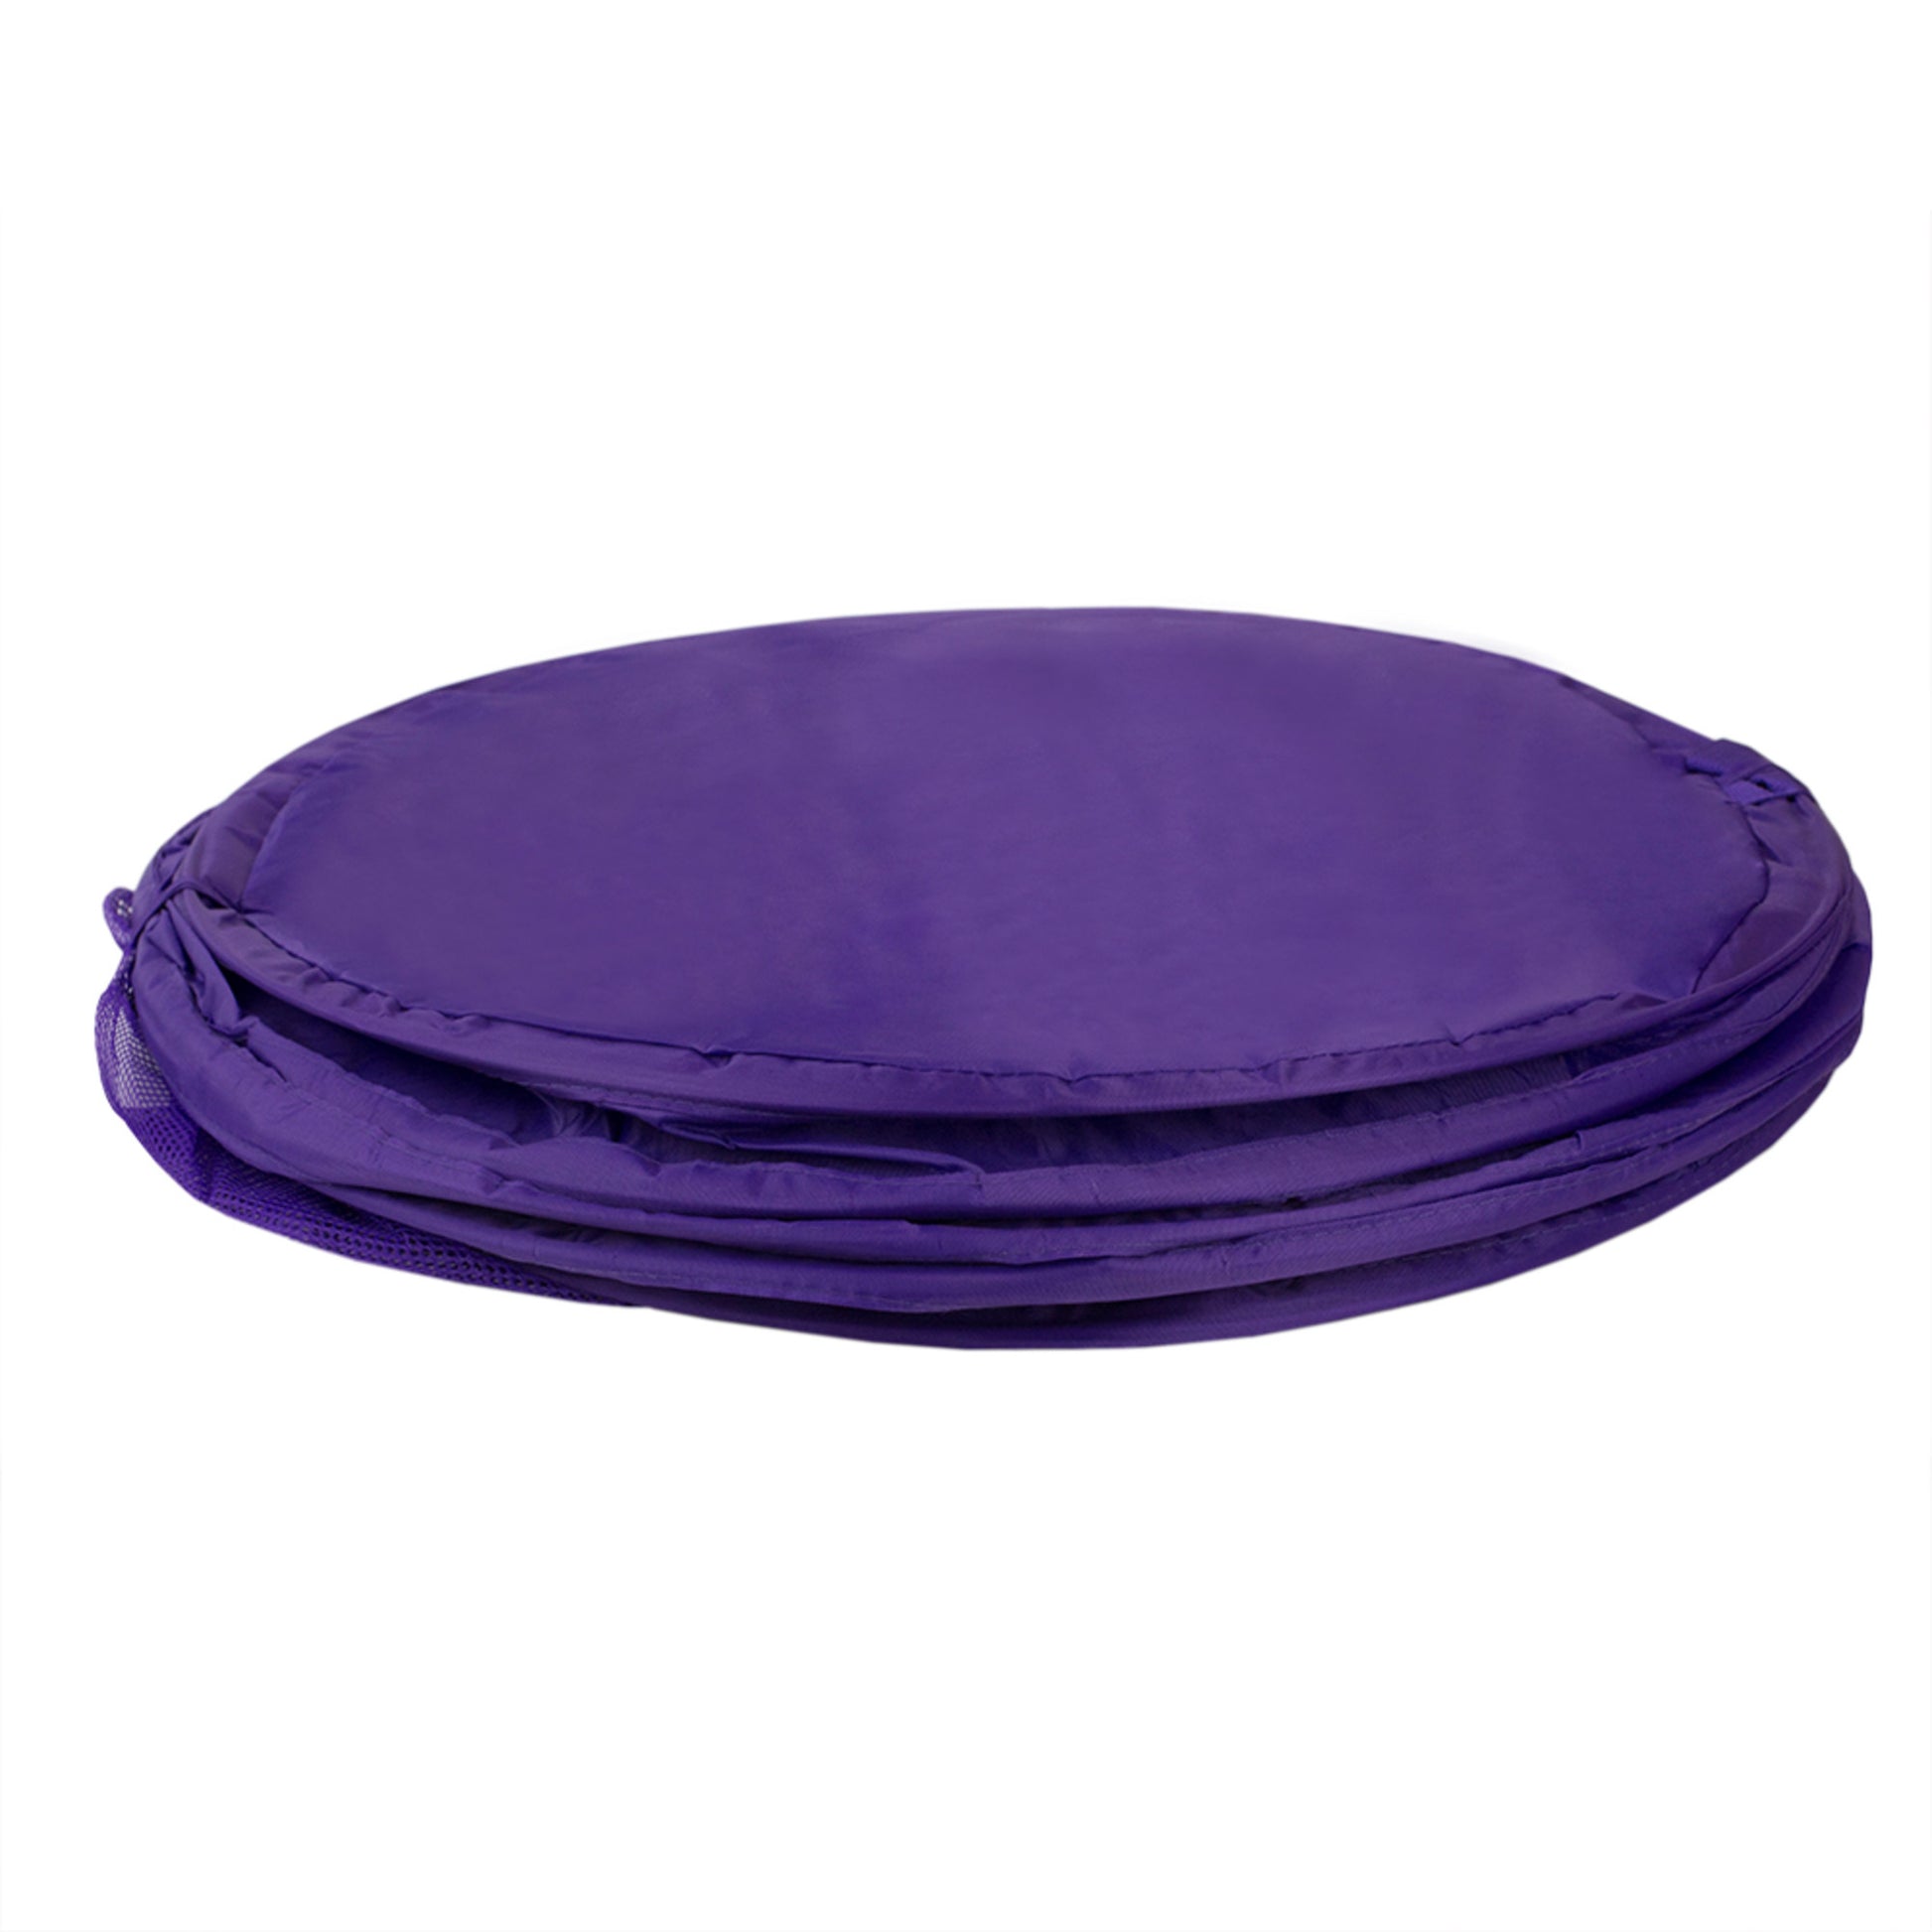 Home Basics Barrel Laundry Hamper, Purple - Purple